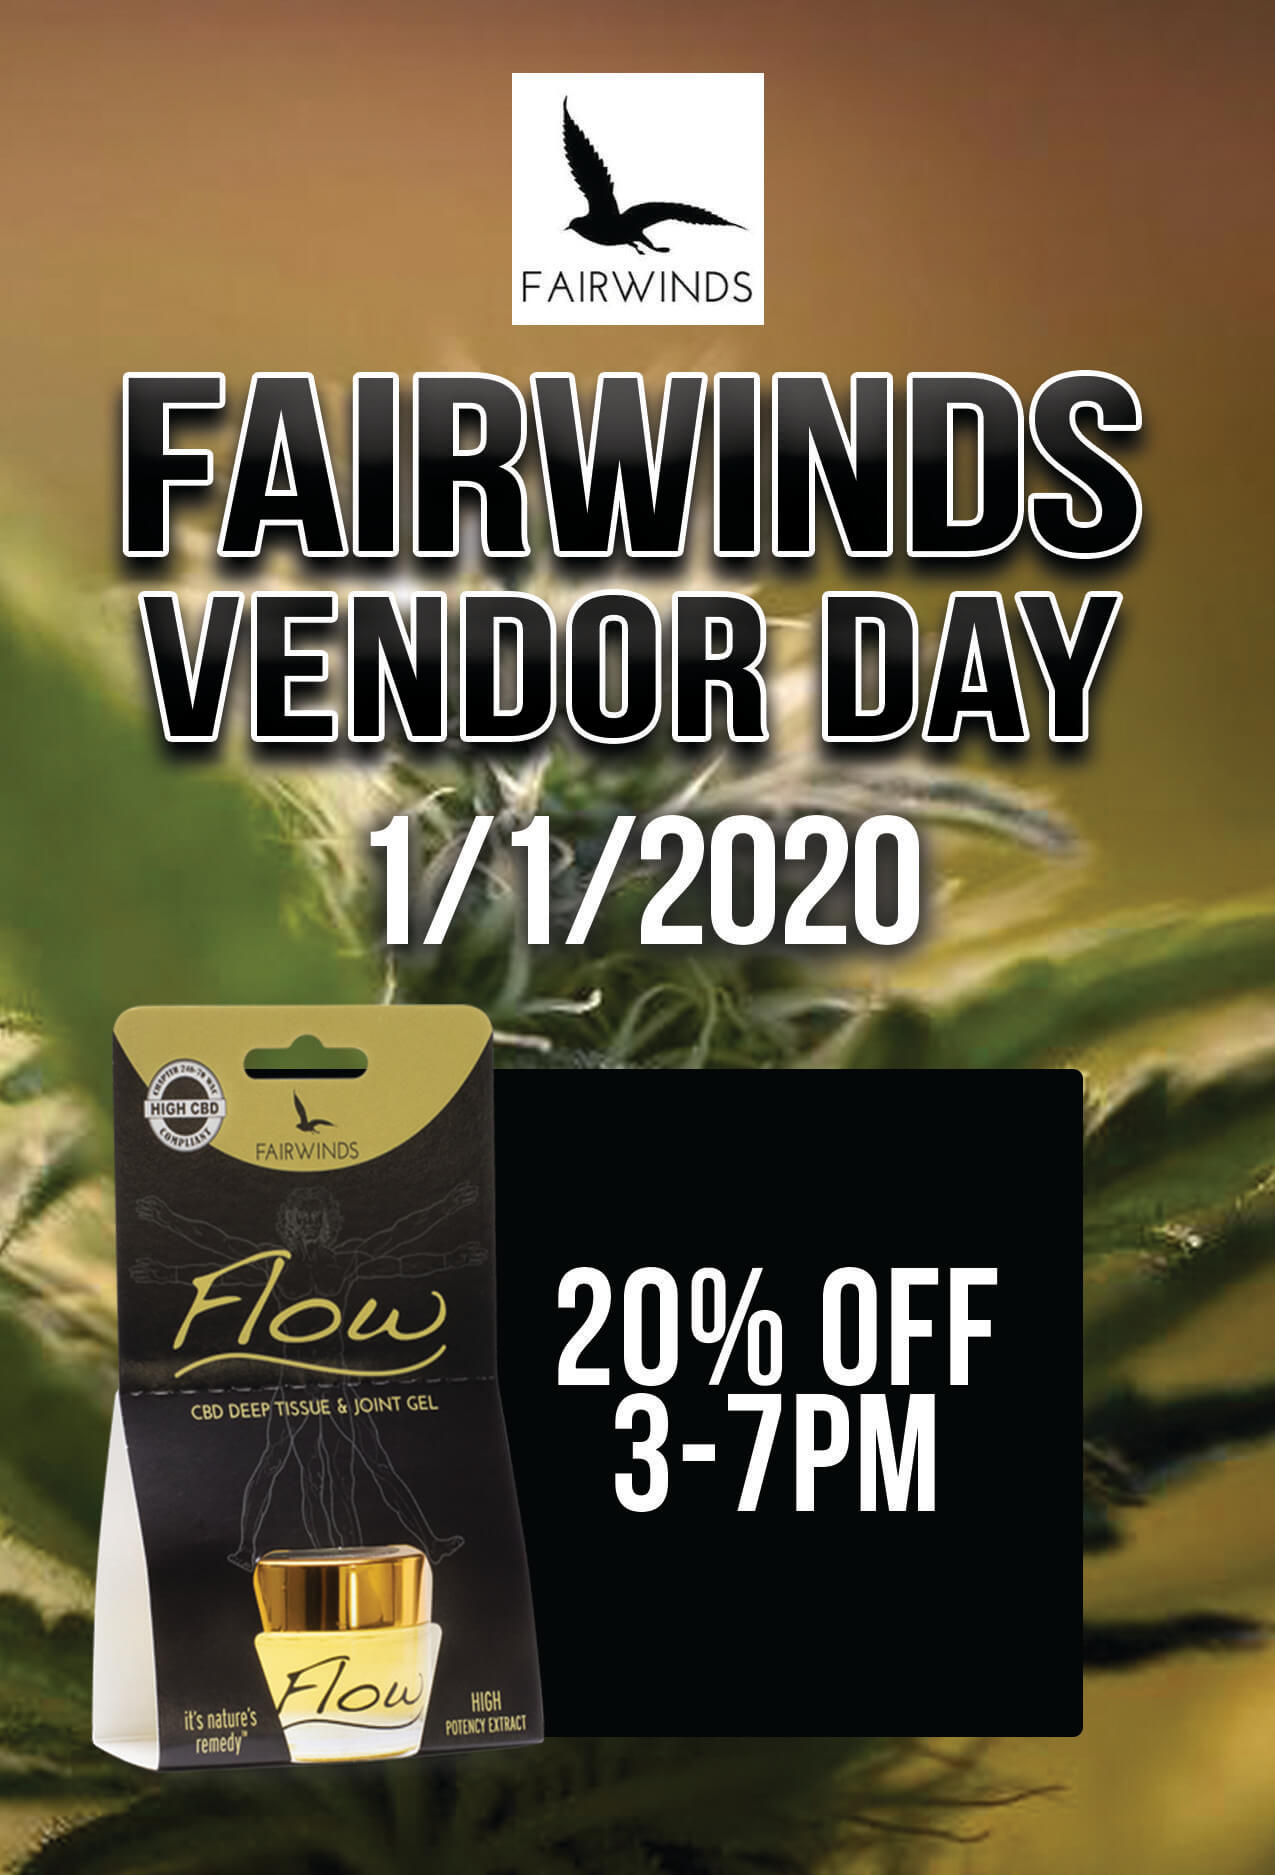 FAIRWINDS Vendor Day – 1/1/2020